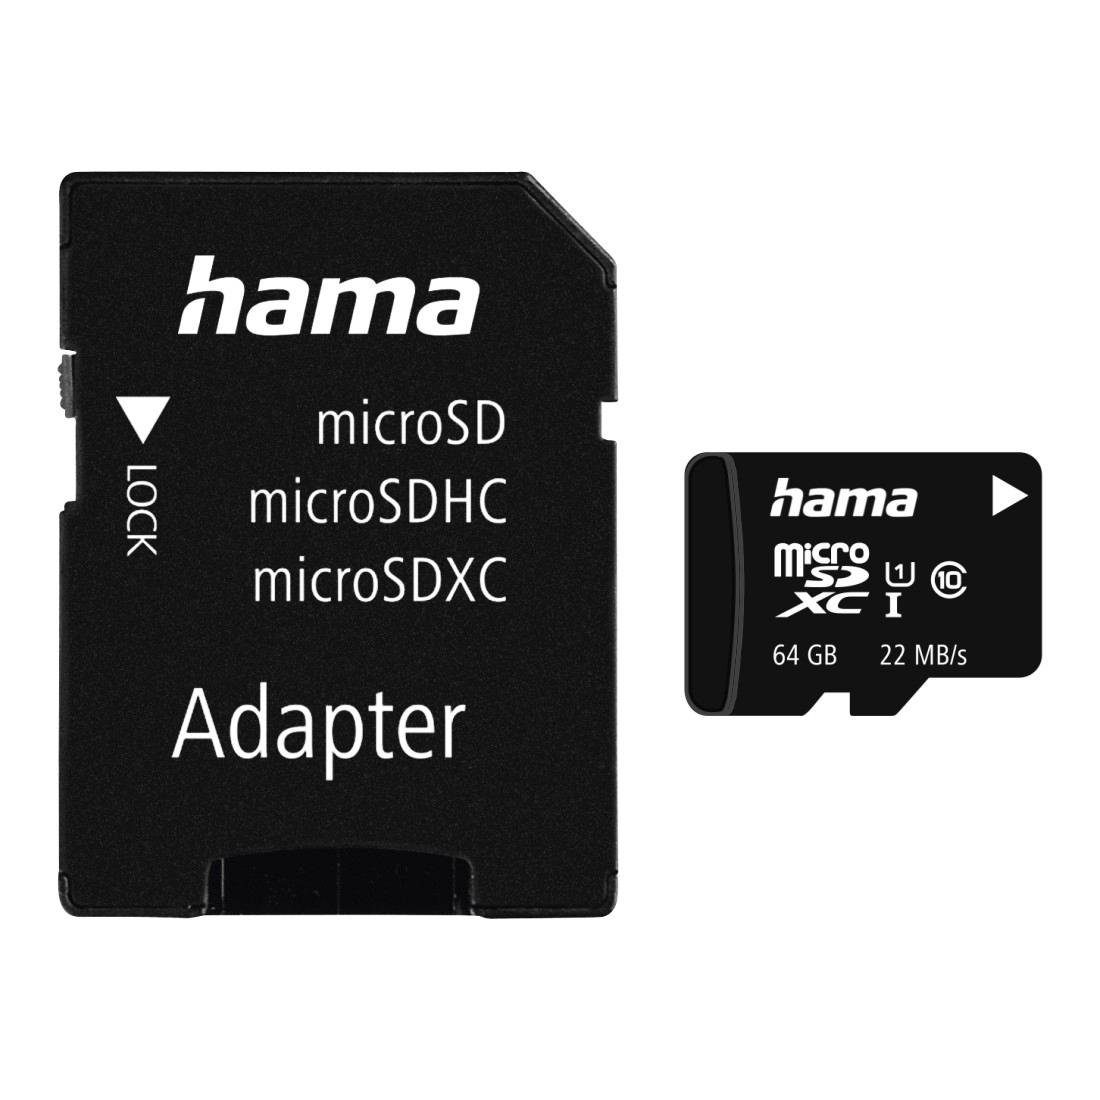 Hama microSDXC 64GB Class 10 UHS-I 22MB/s+ Adapter/Foto Speicherkarte (64 GB, UHS-I Class 10, 22 MB/s Lesegeschwindigkeit)